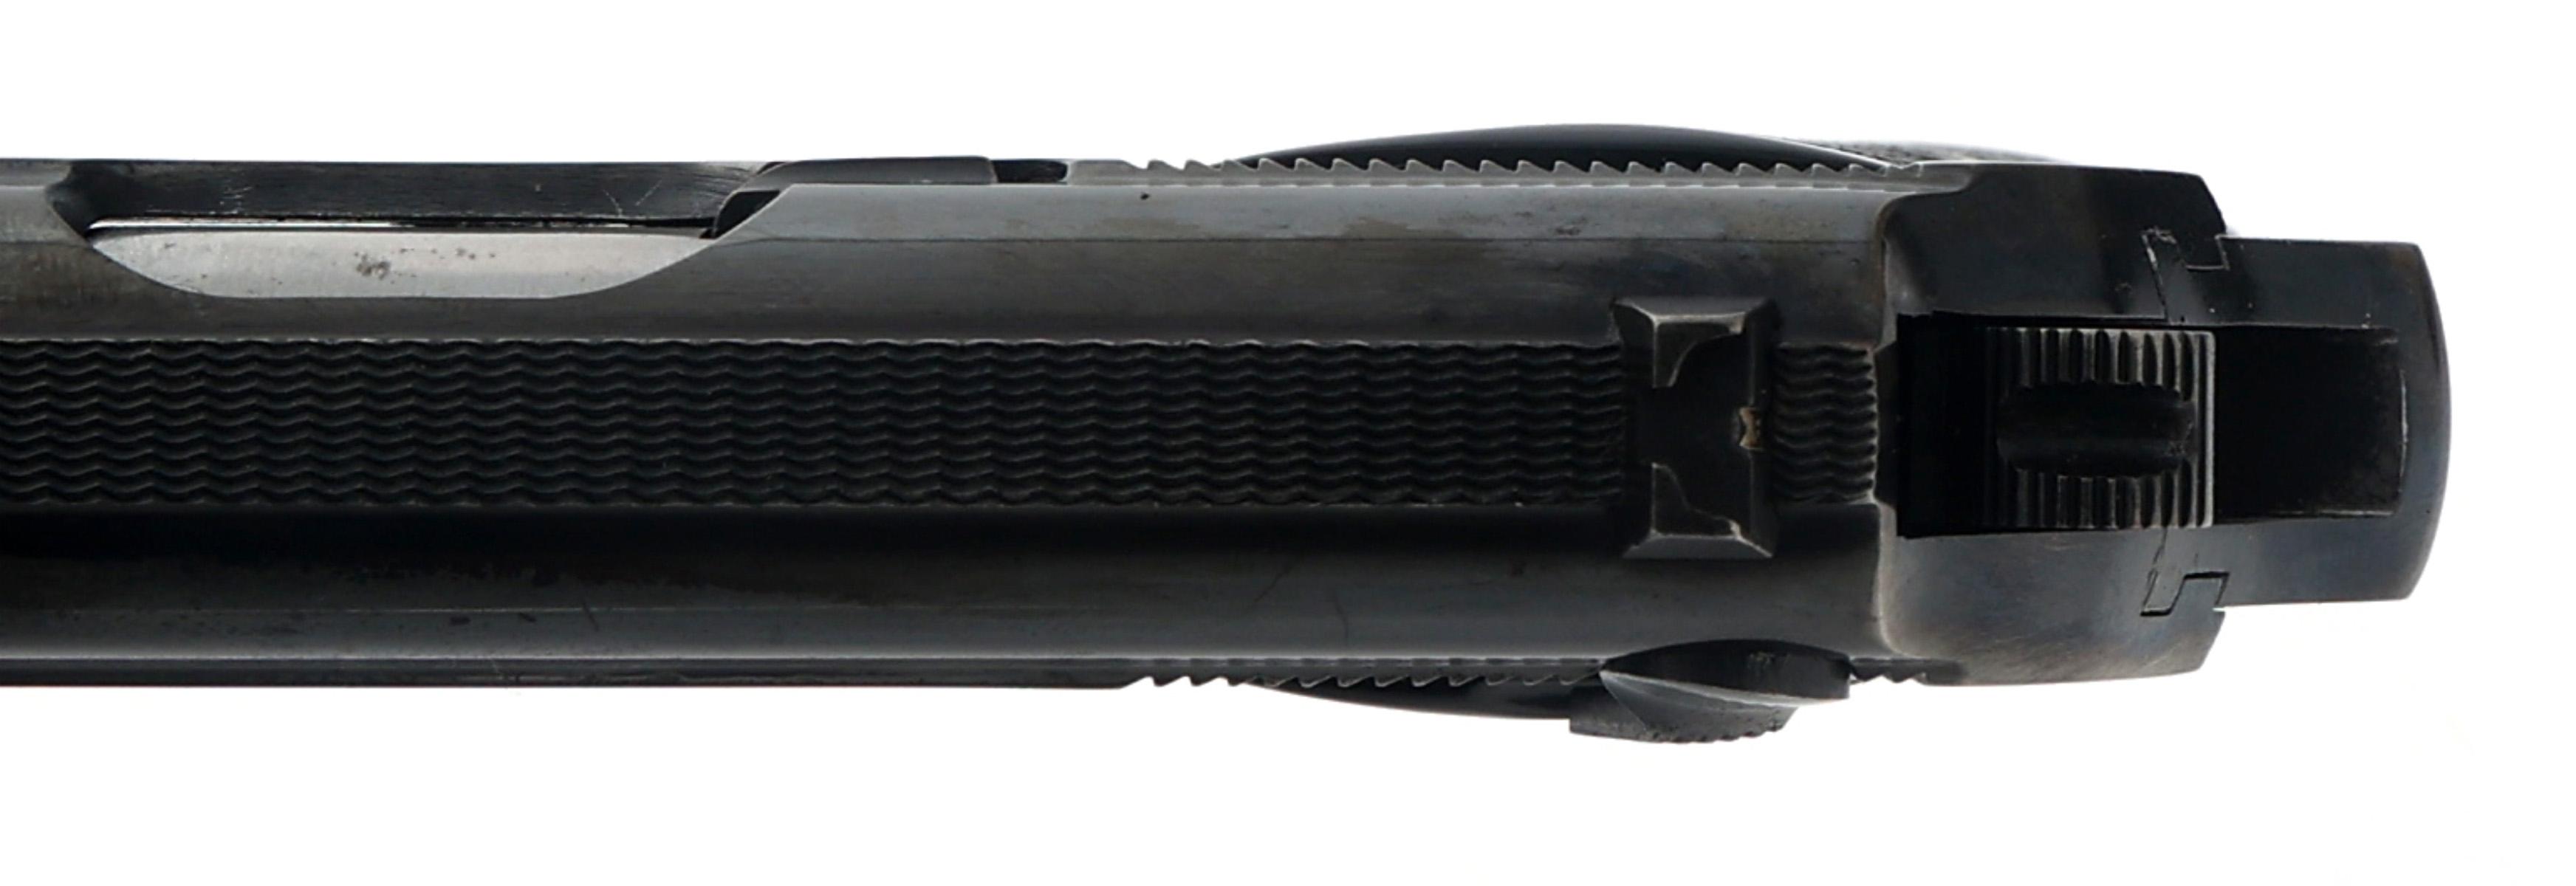 WALTHER MODEL PPK/S 7.65mm CALIBER PISTOL